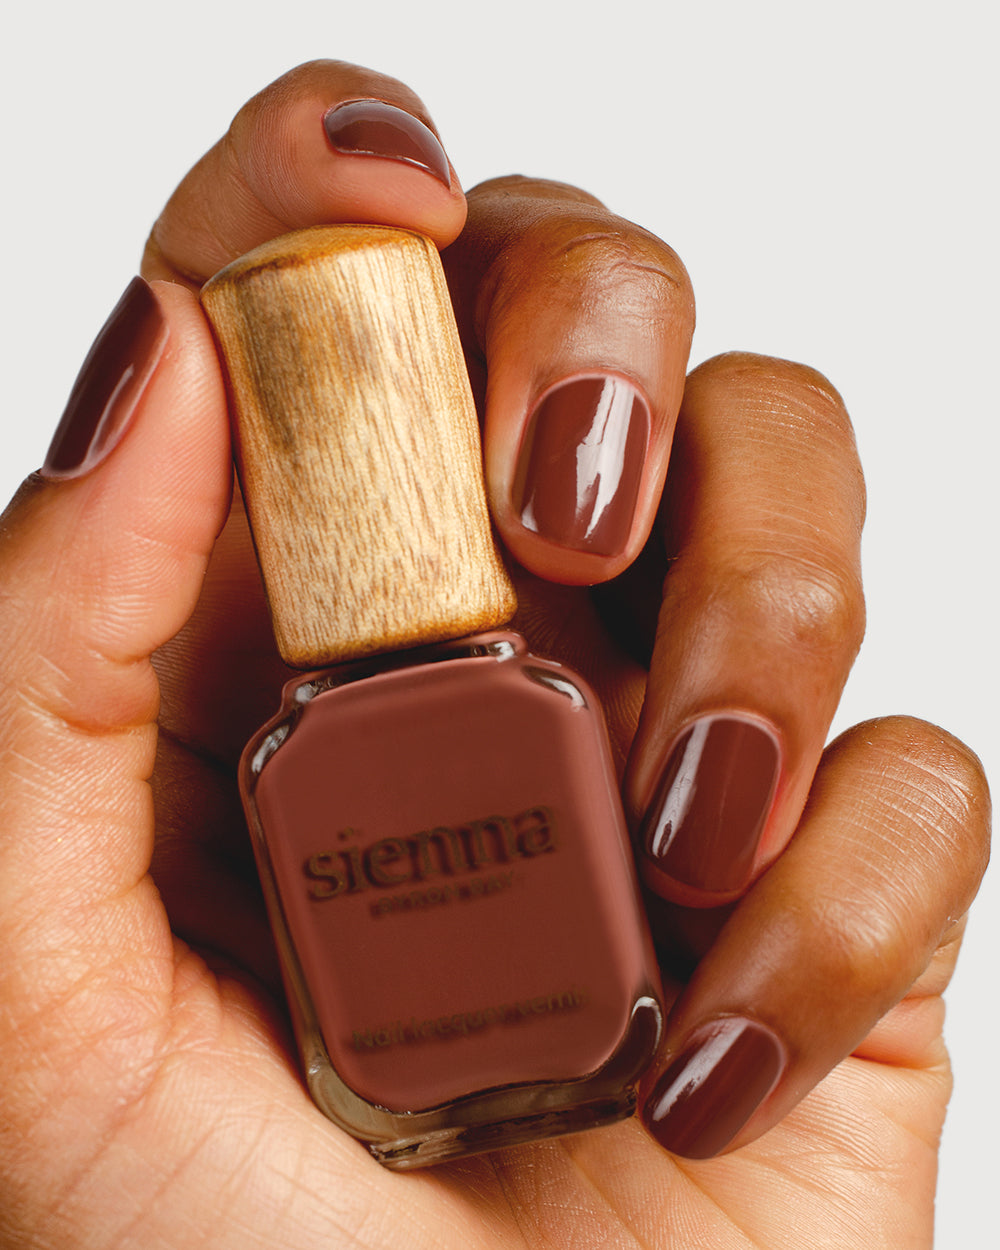 brown nail polish hand swatch on medium skin tone holding a sienna bottle